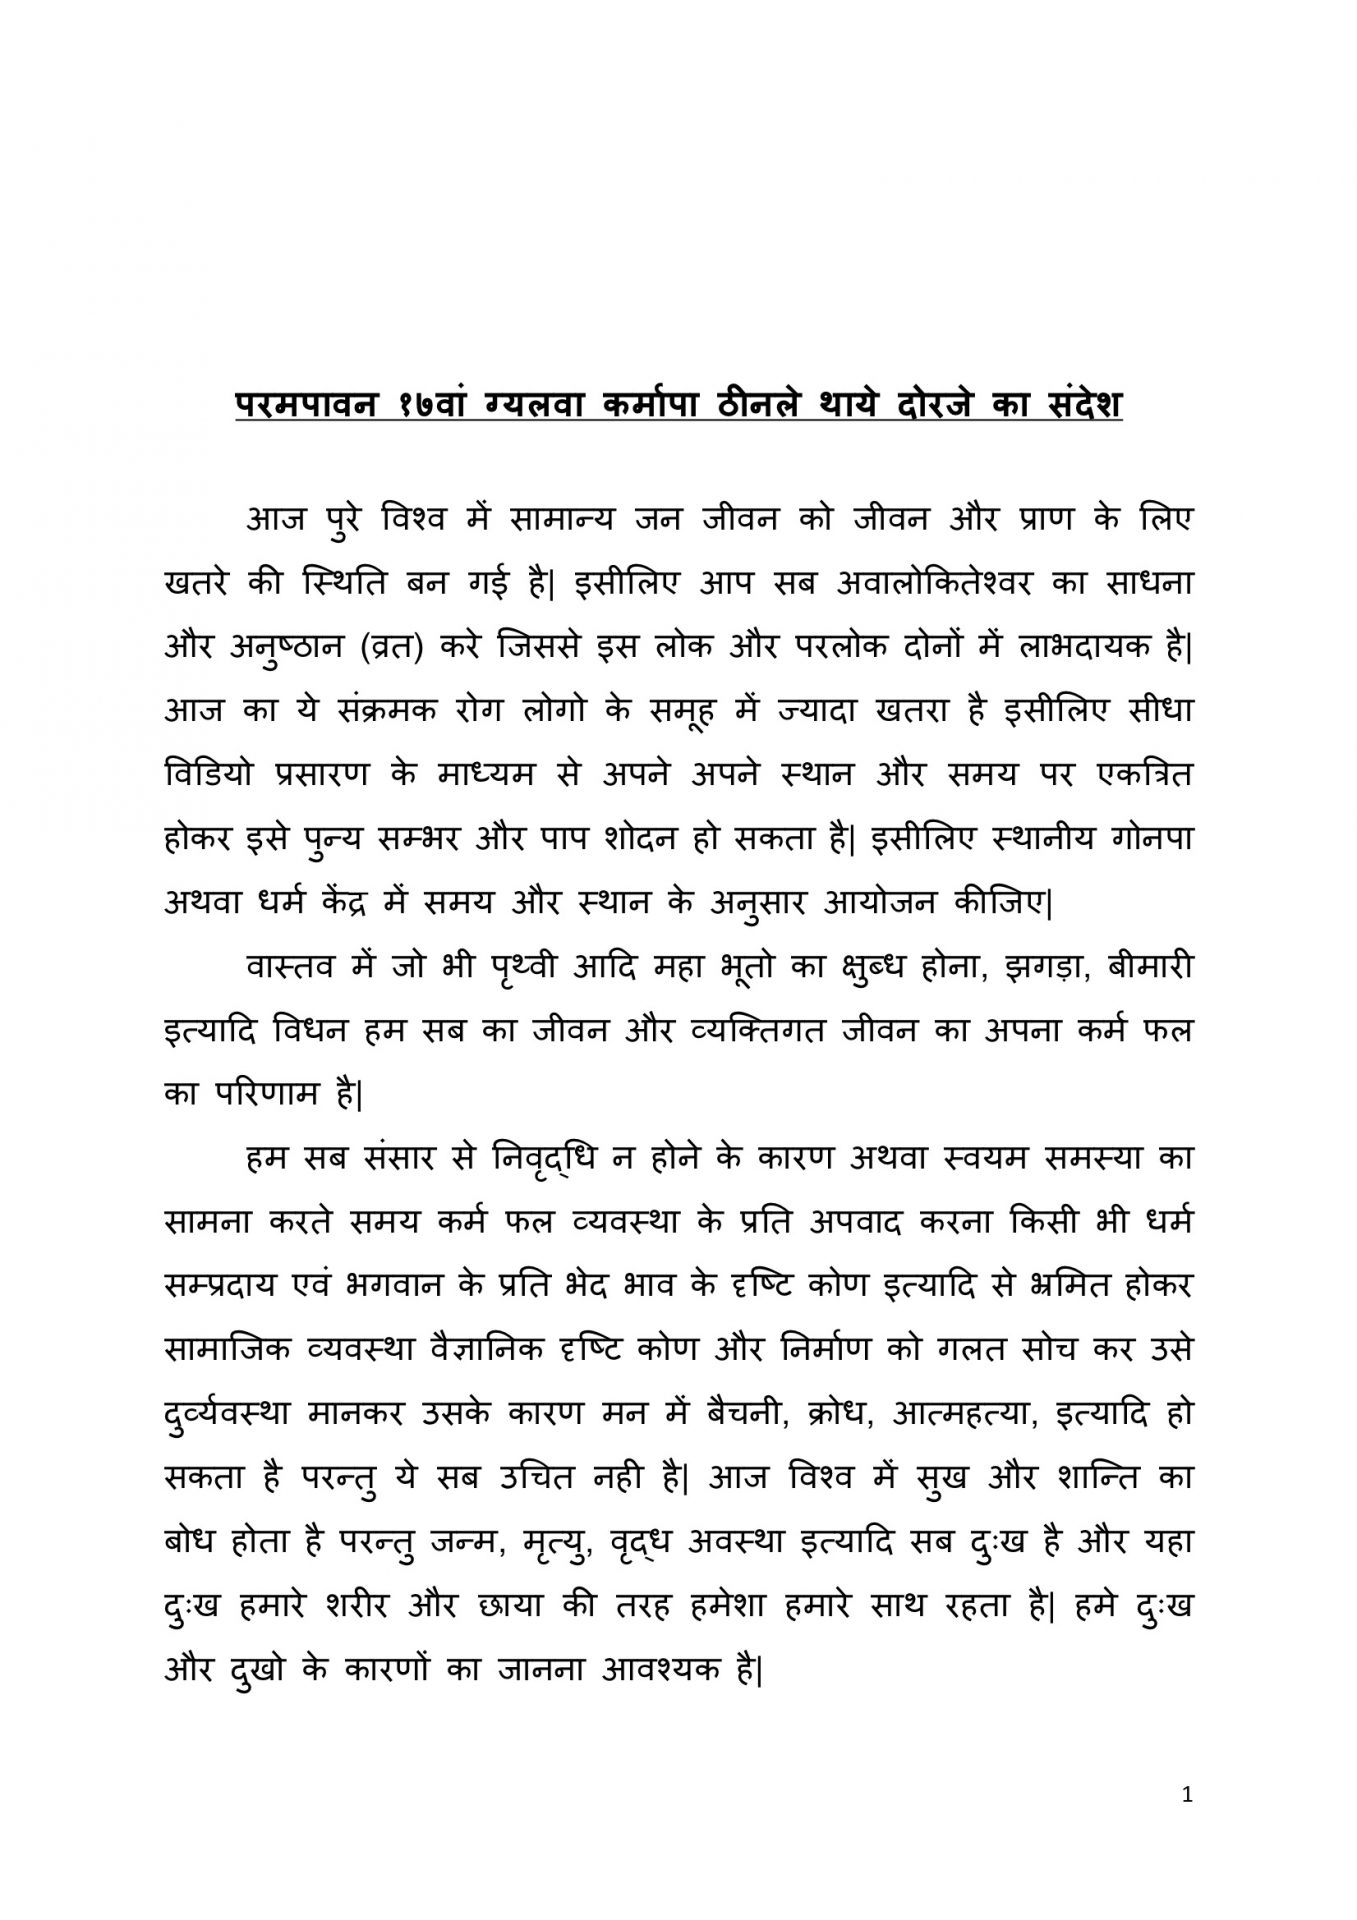 corona essay in hindi pdf download